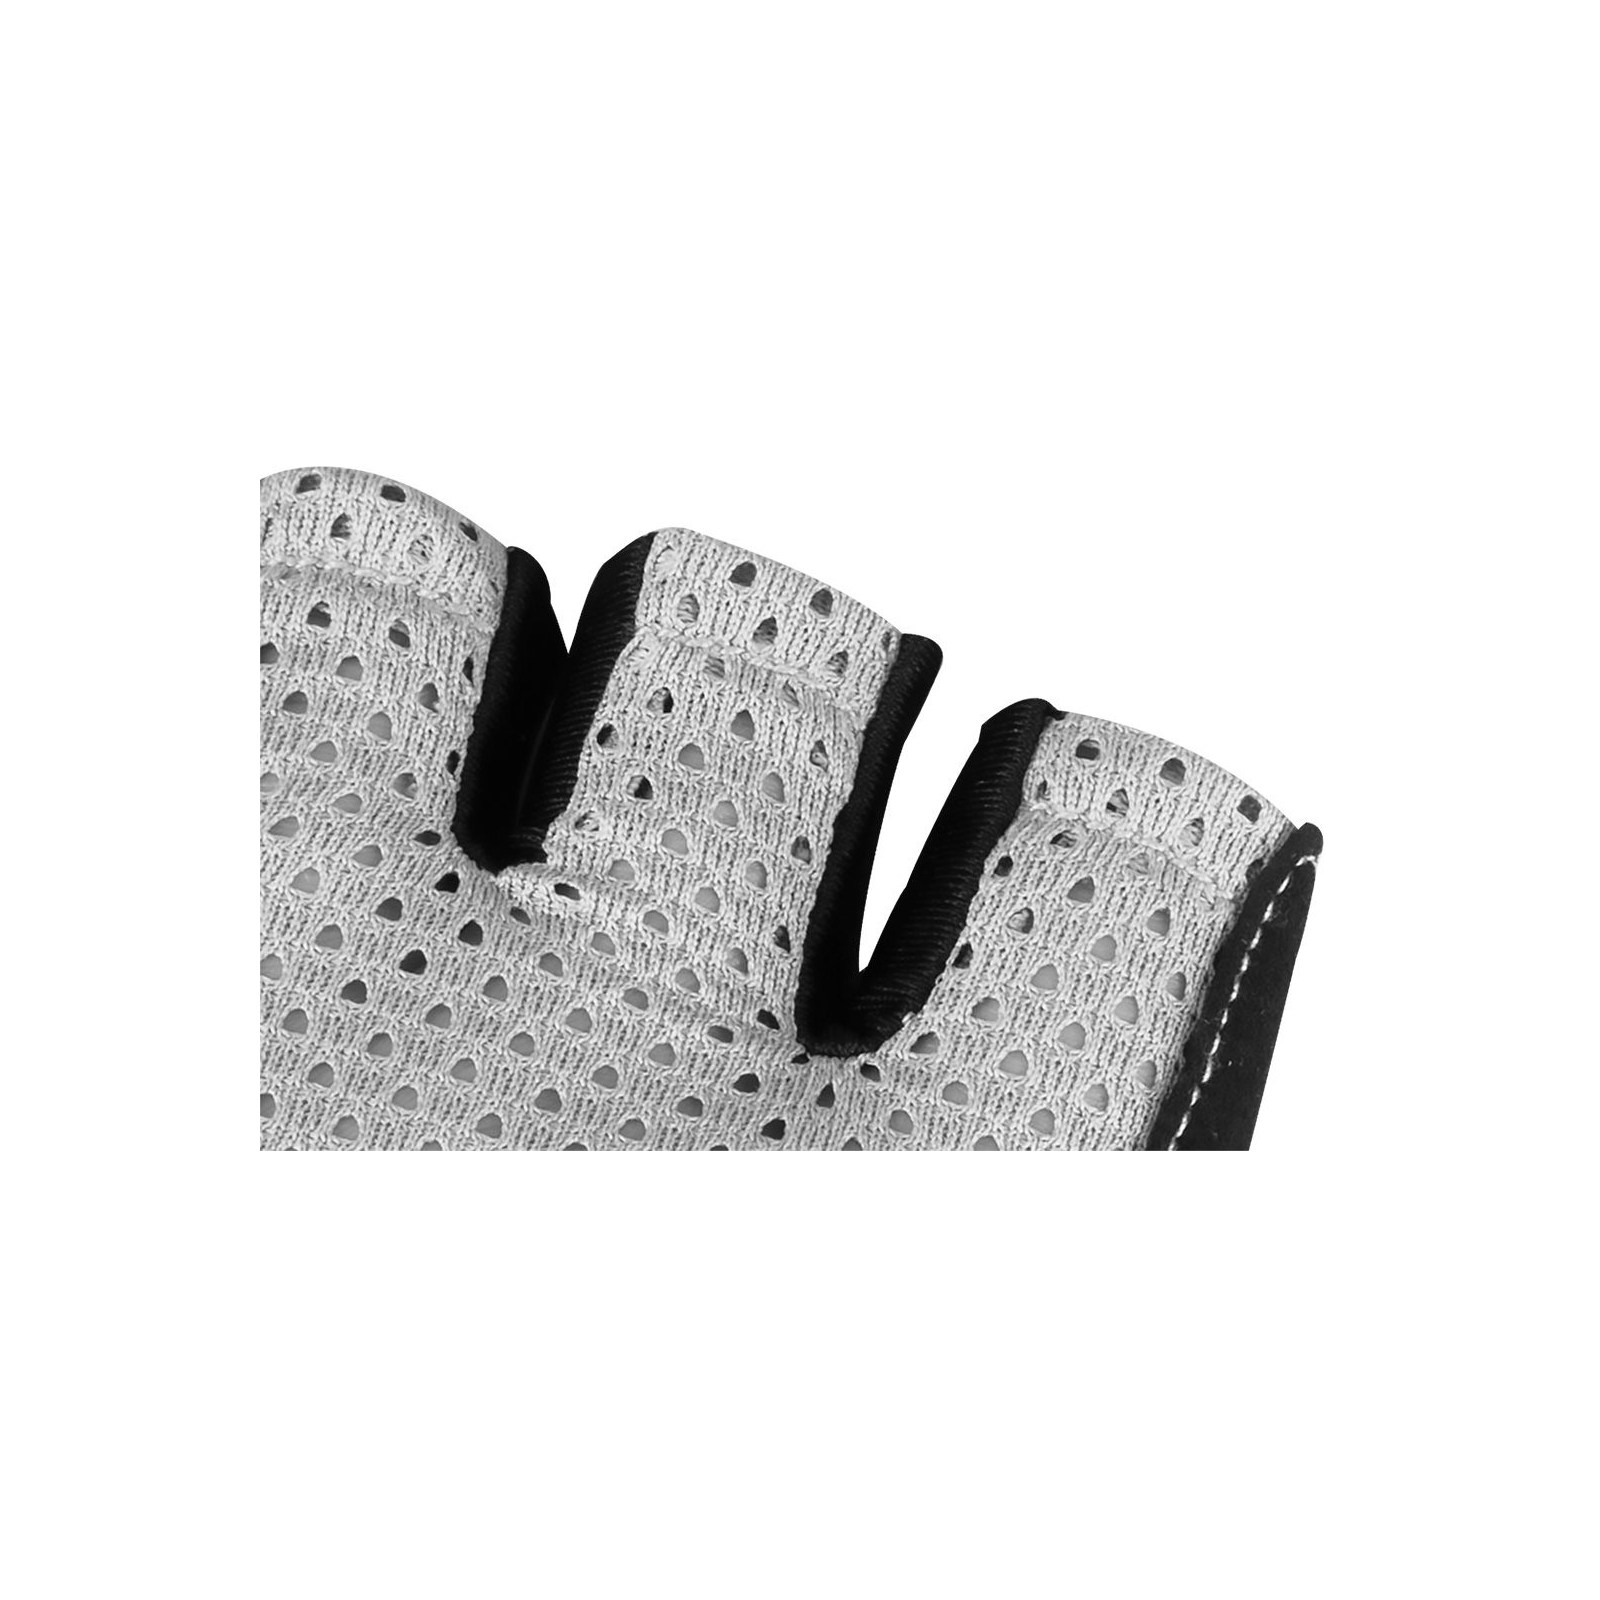 Велоперчатки Neo Tools White M (91-016-M) изображение 11